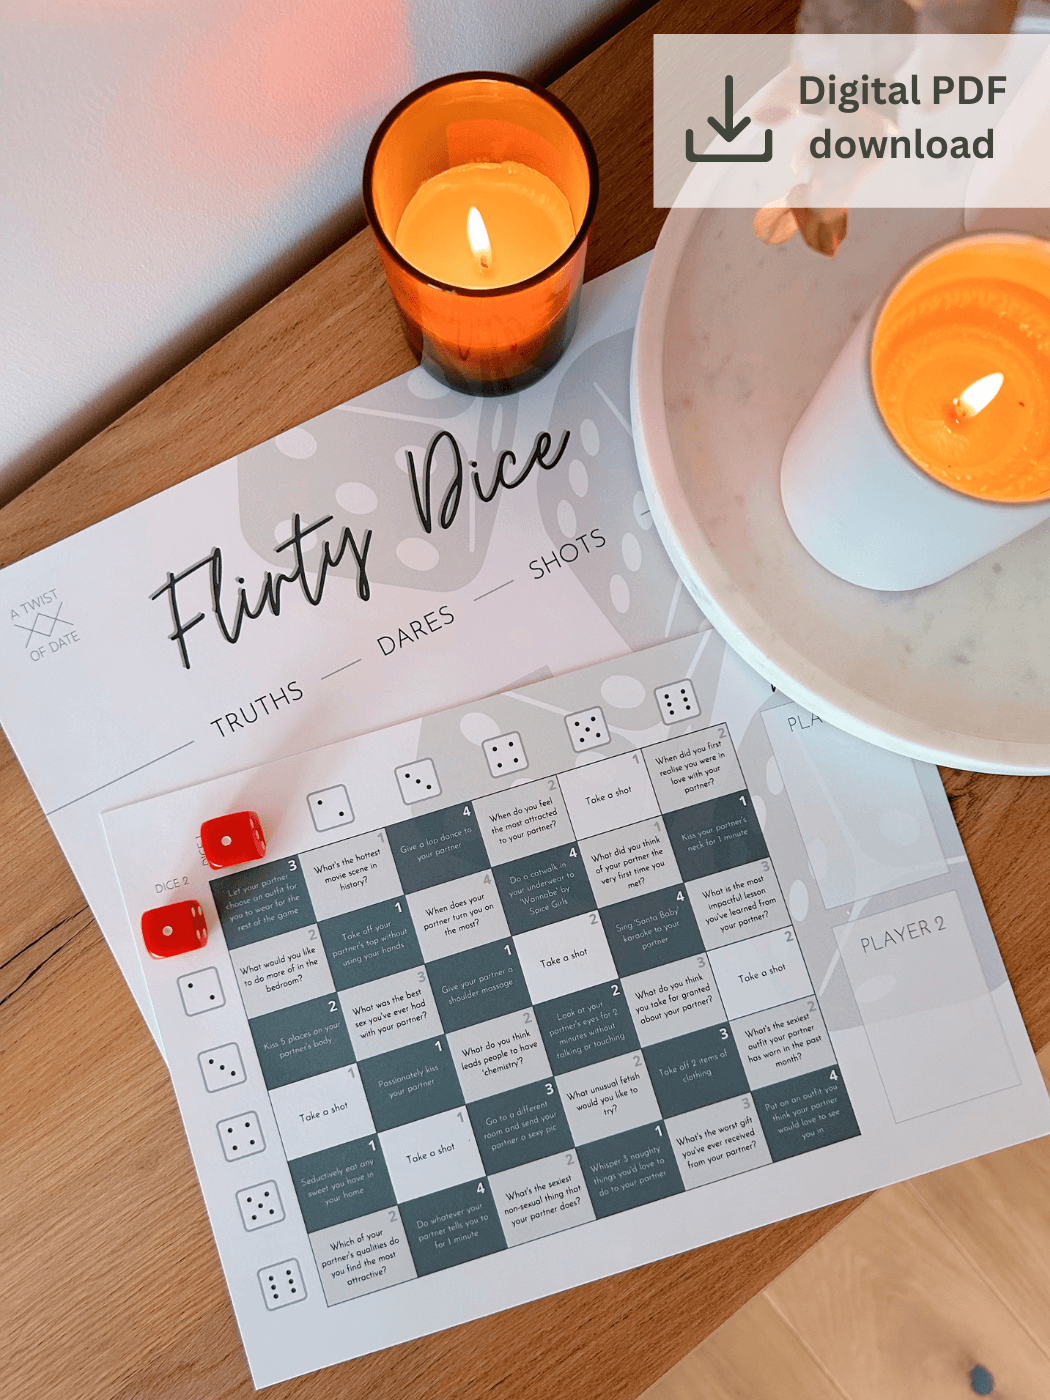 'Flirty Dice' Printable Date Night Game